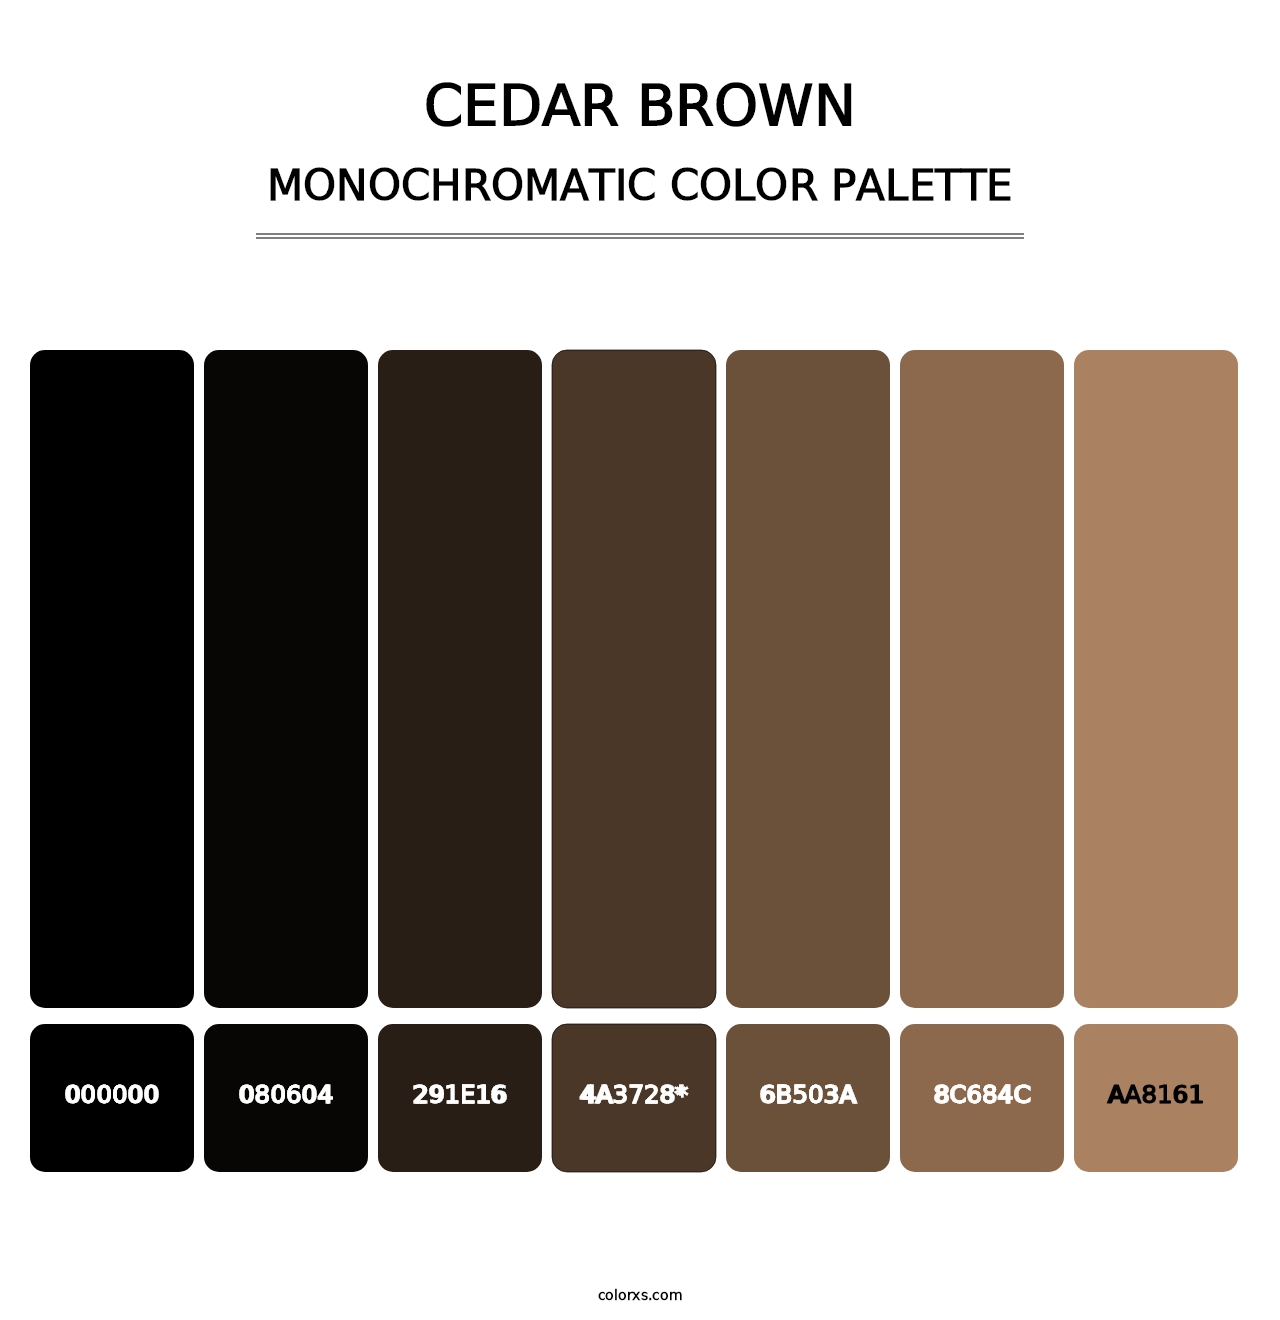 Cedar Brown - Monochromatic Color Palette